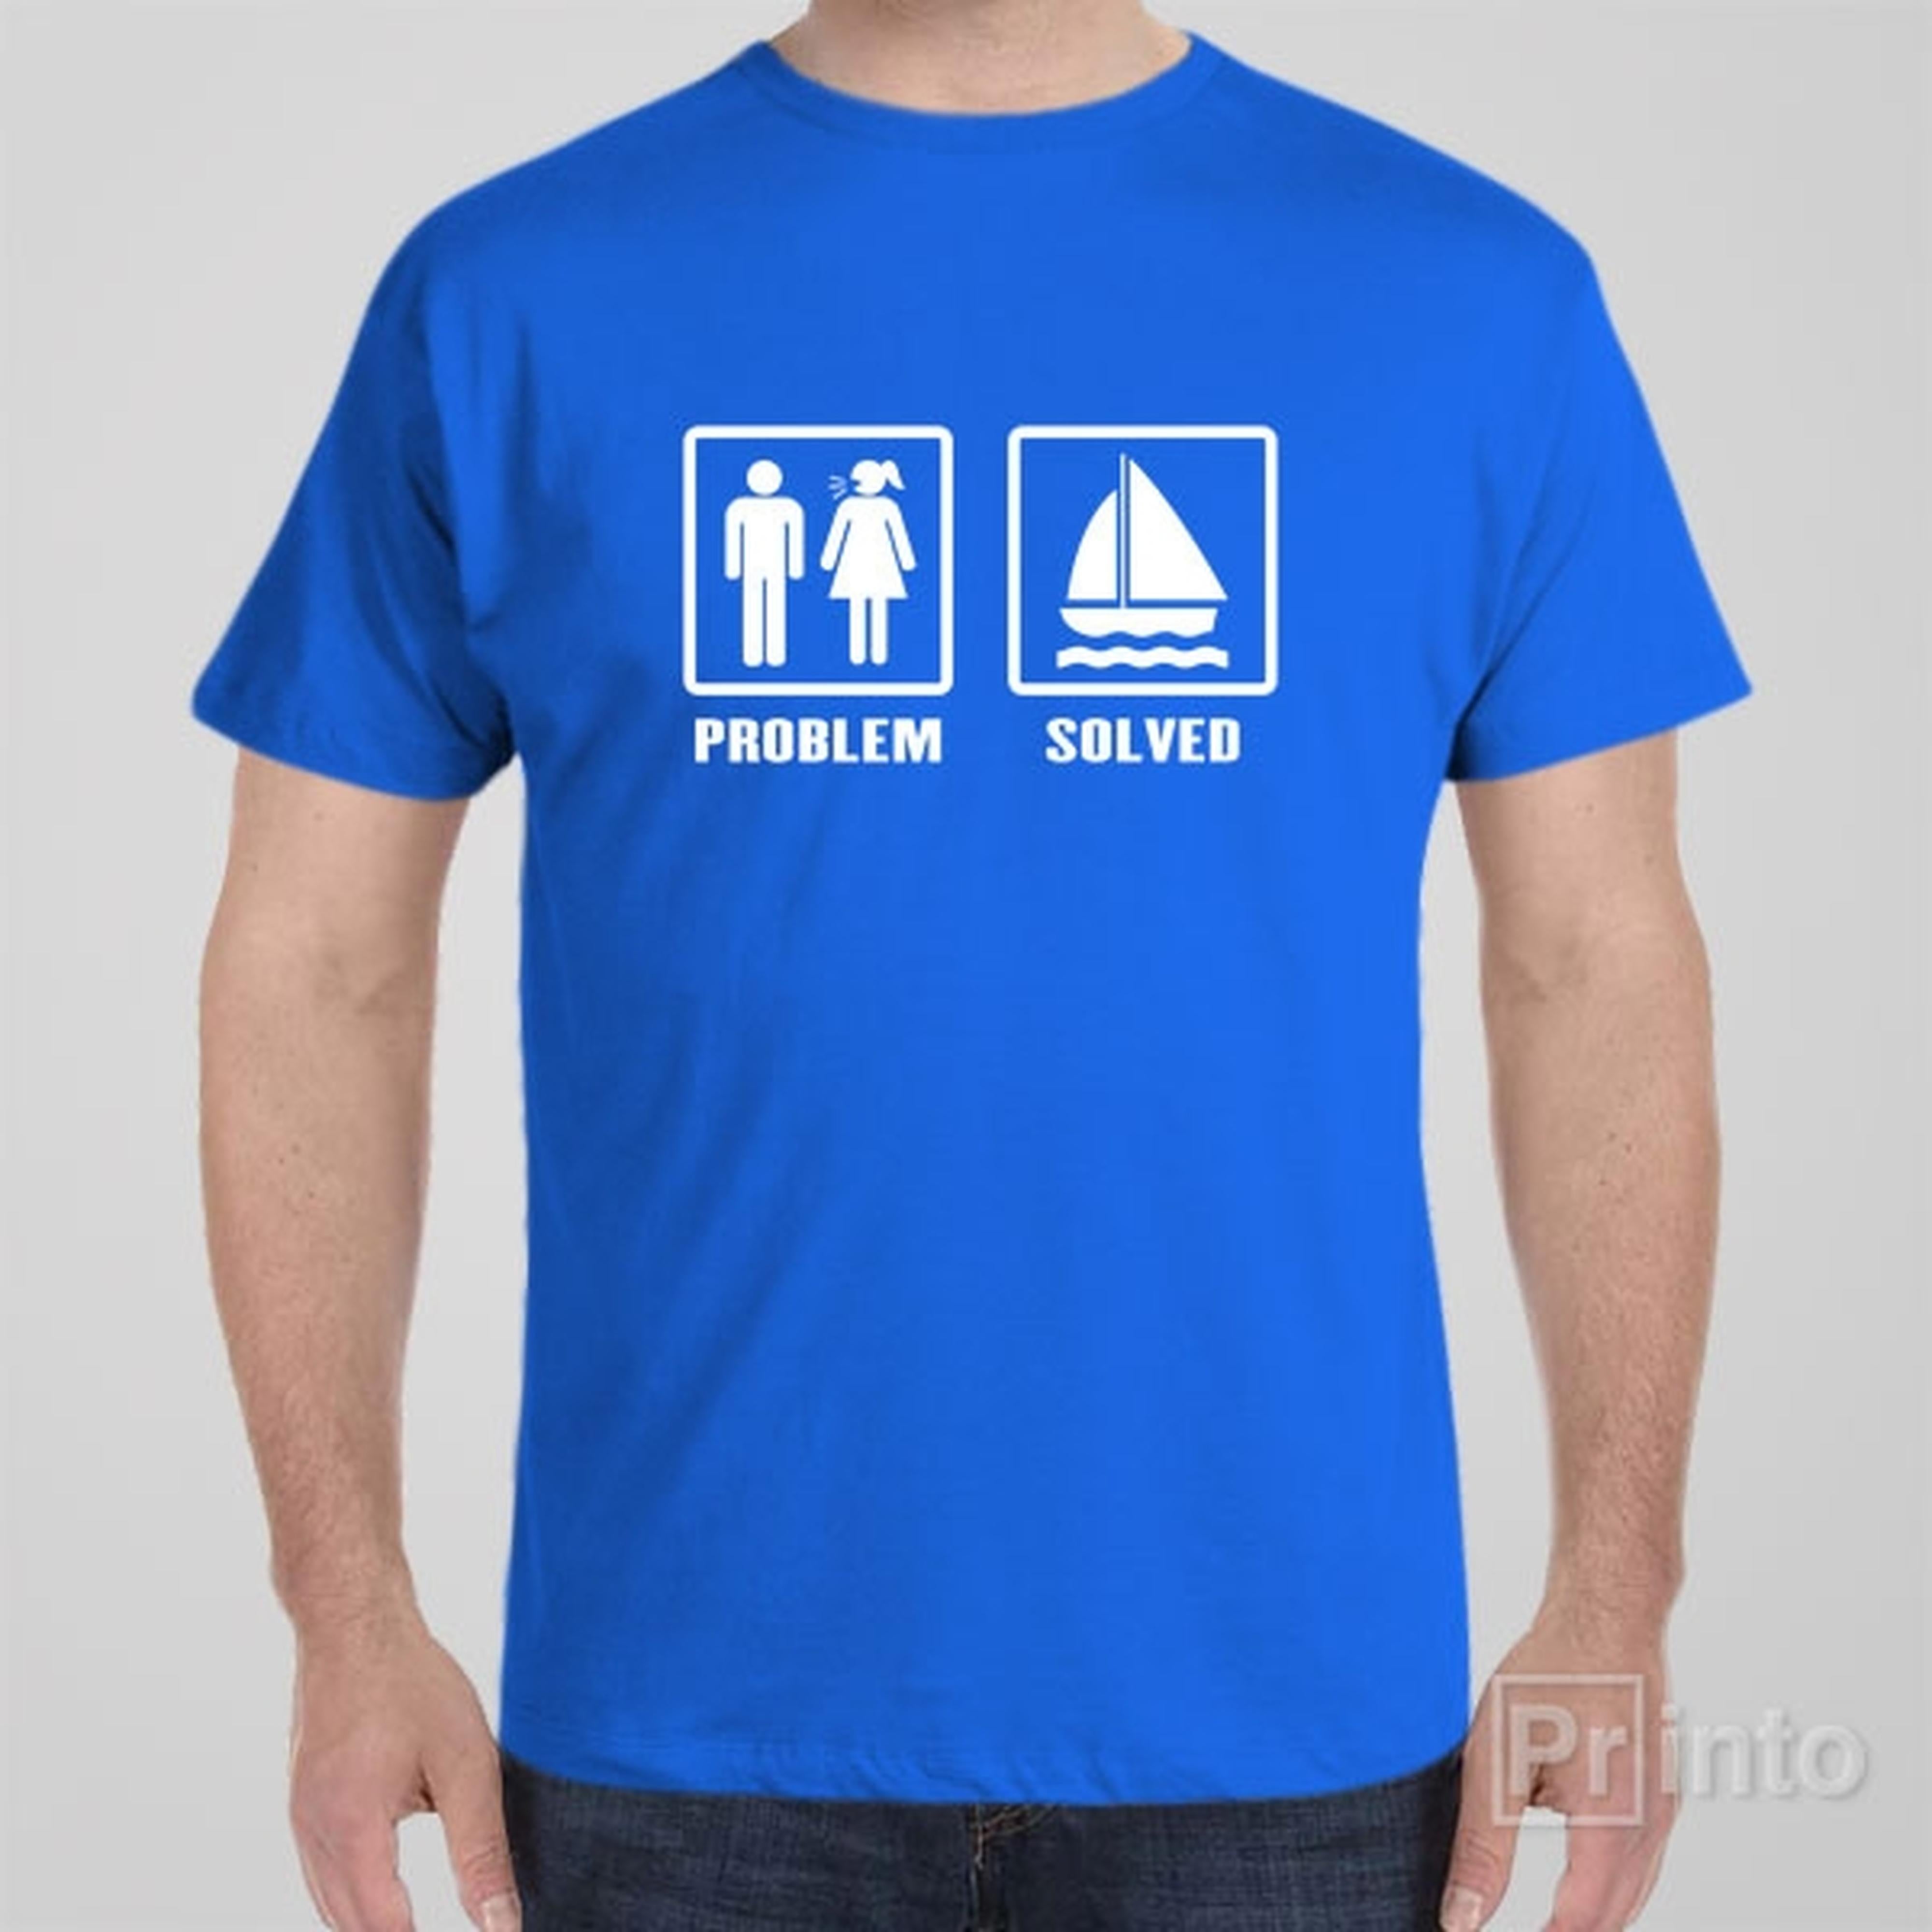 Funny Sailing T-Shirts & T-Shirt Designs